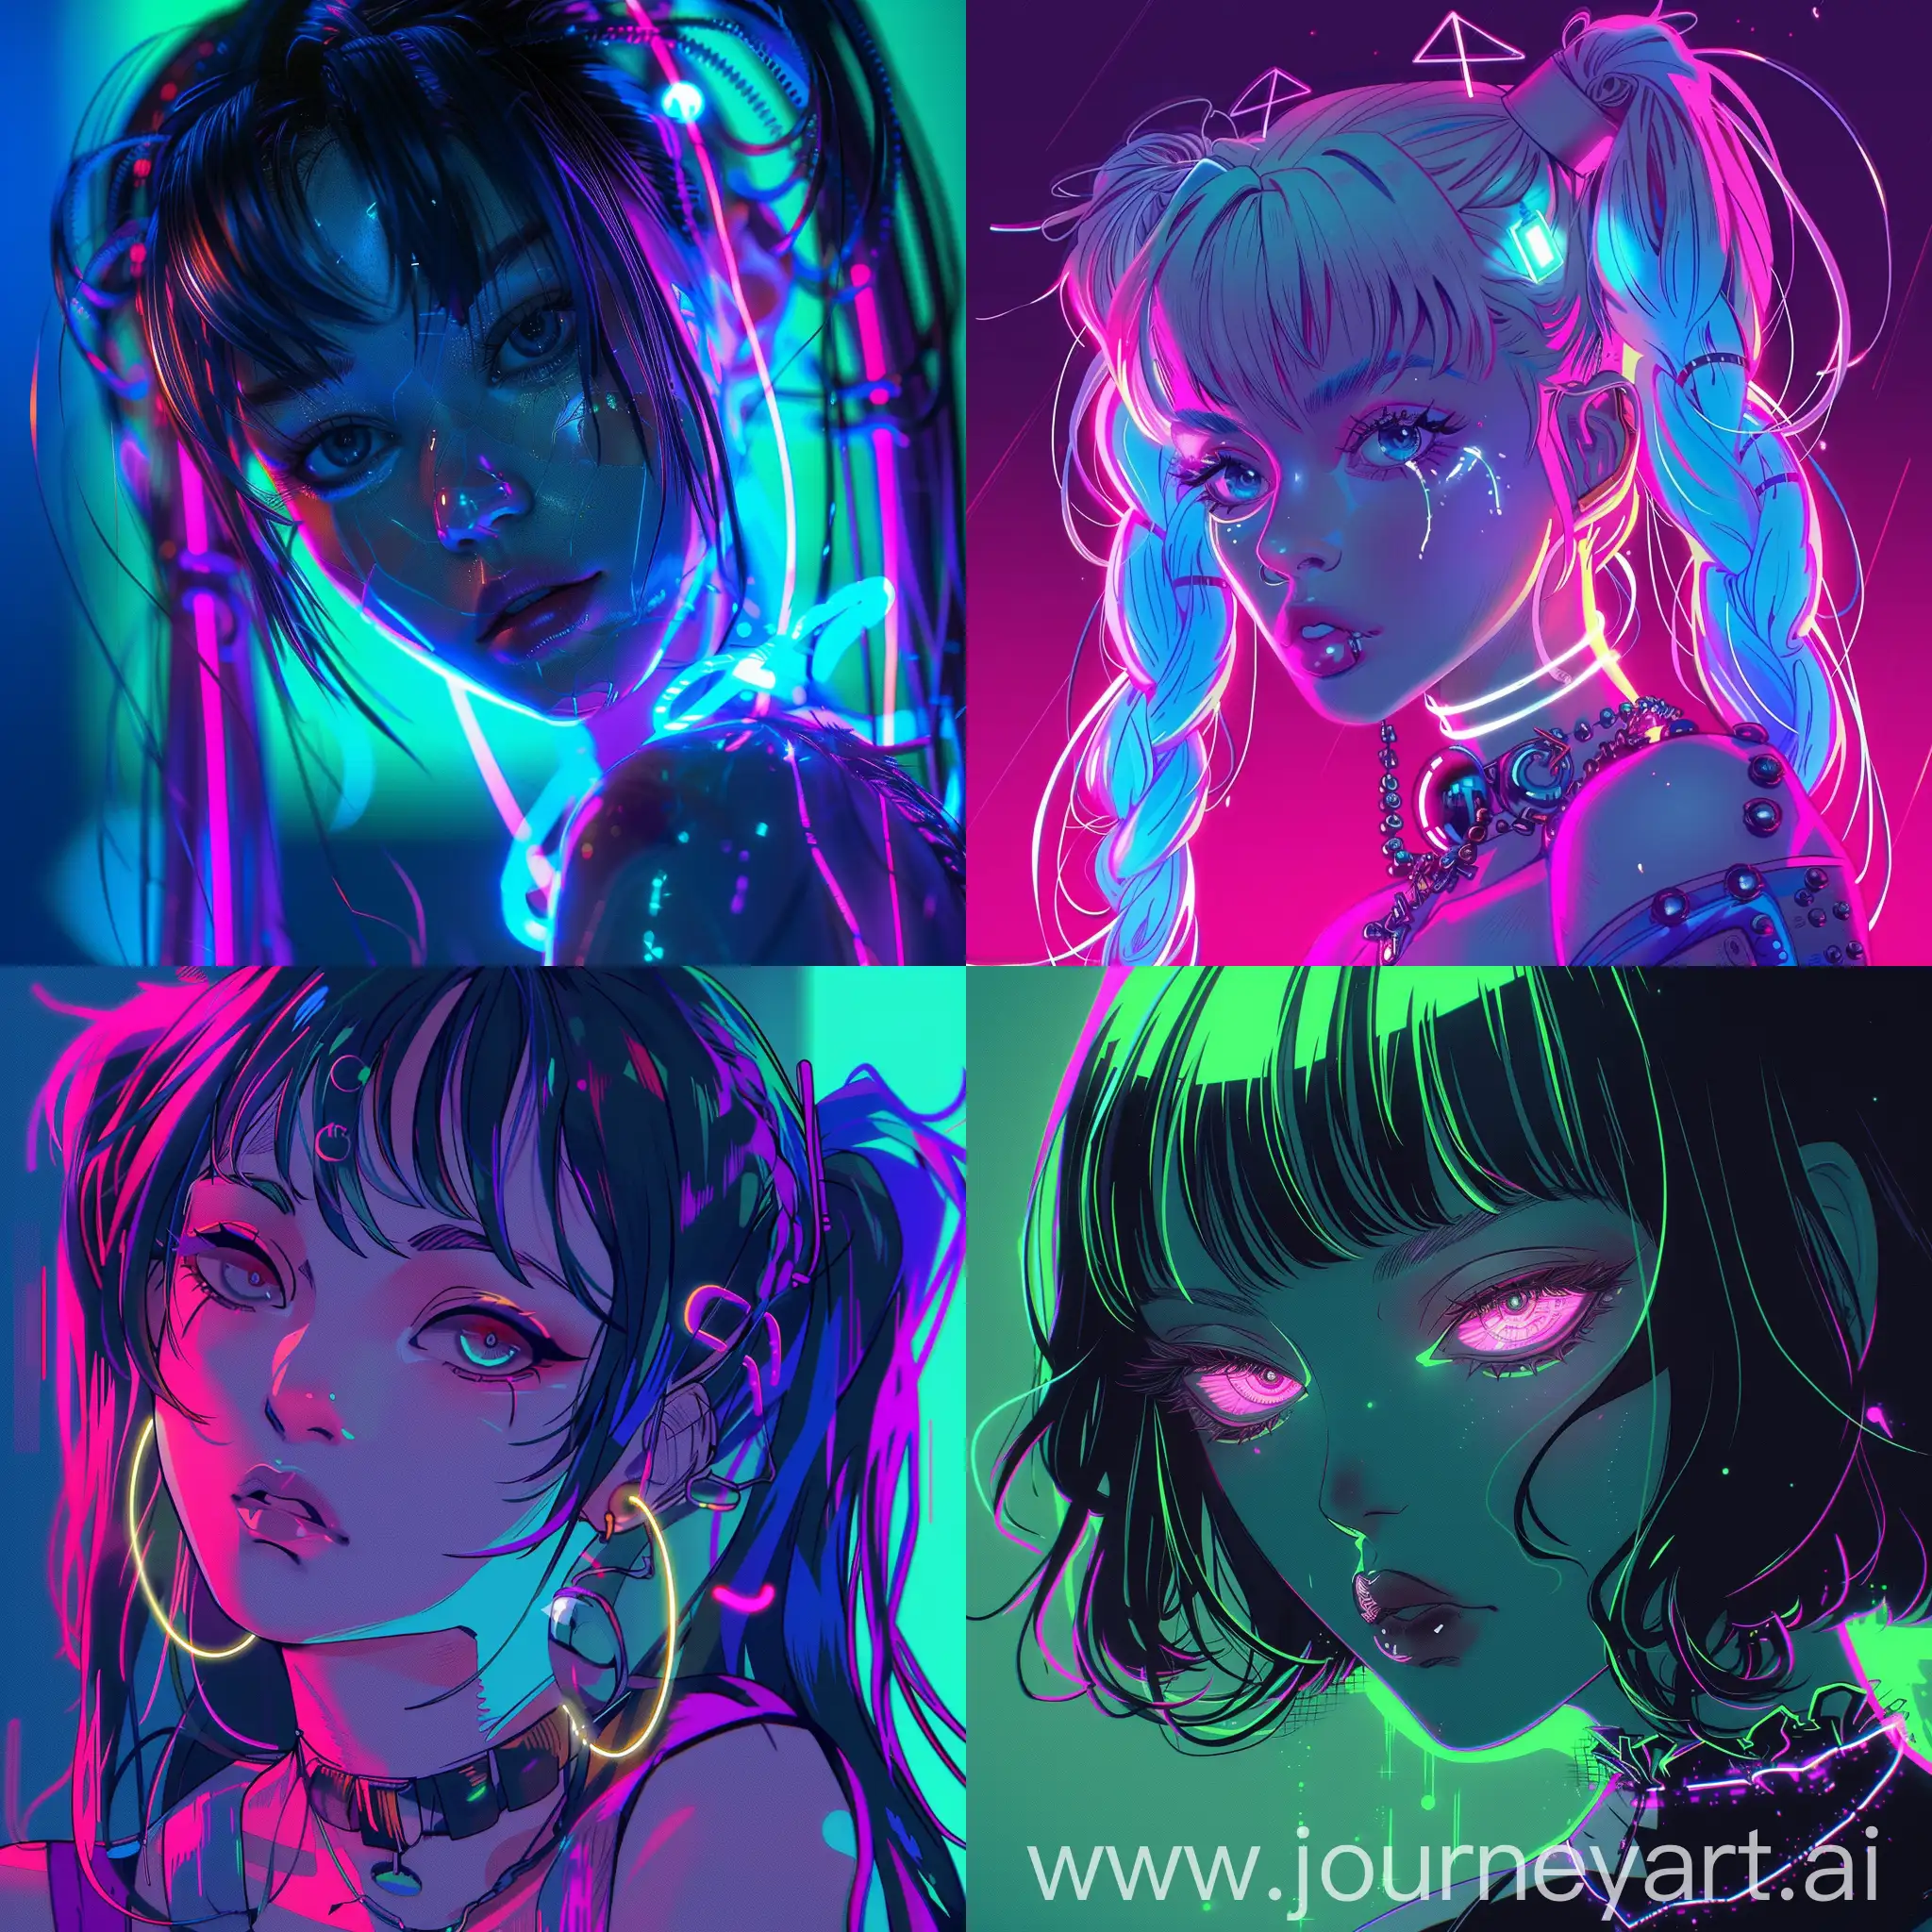 Vibrant-Neon-Anime-Girl-with-Mysterious-Aura